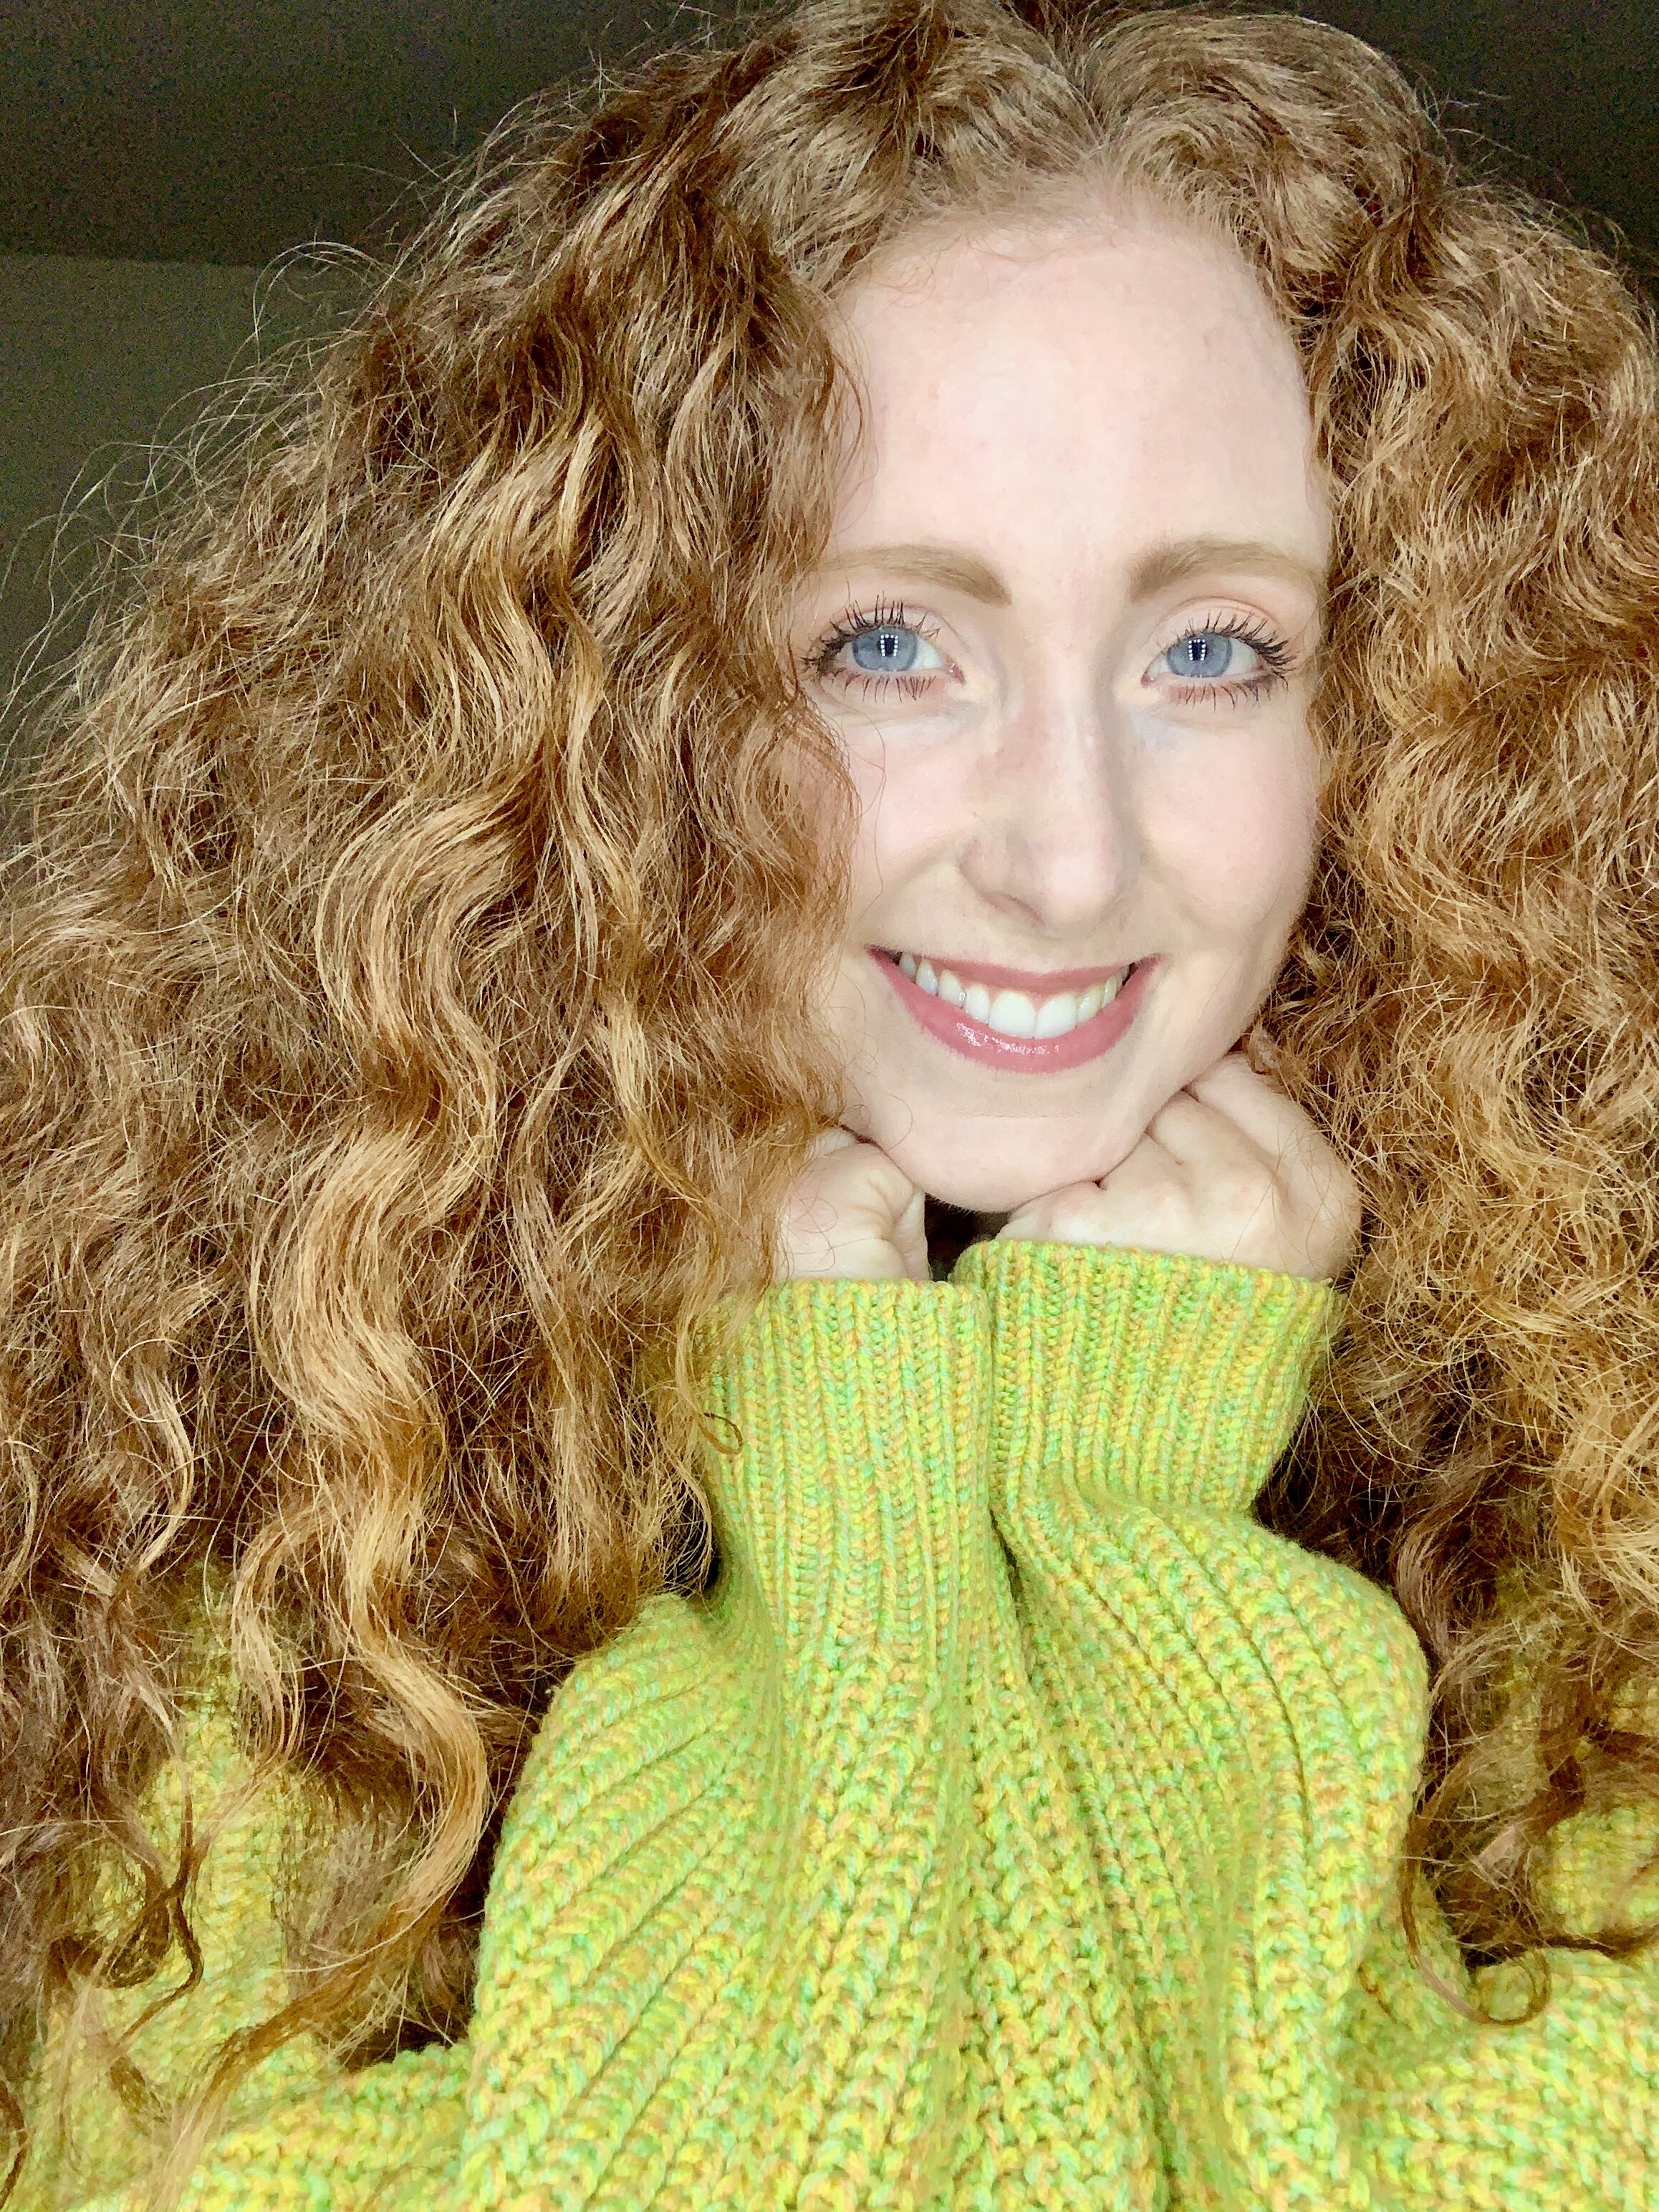 Top Hair Treatments at Sephora — Lorna Ryan - A San Francisco Lifestyle  Blog sharing top finds